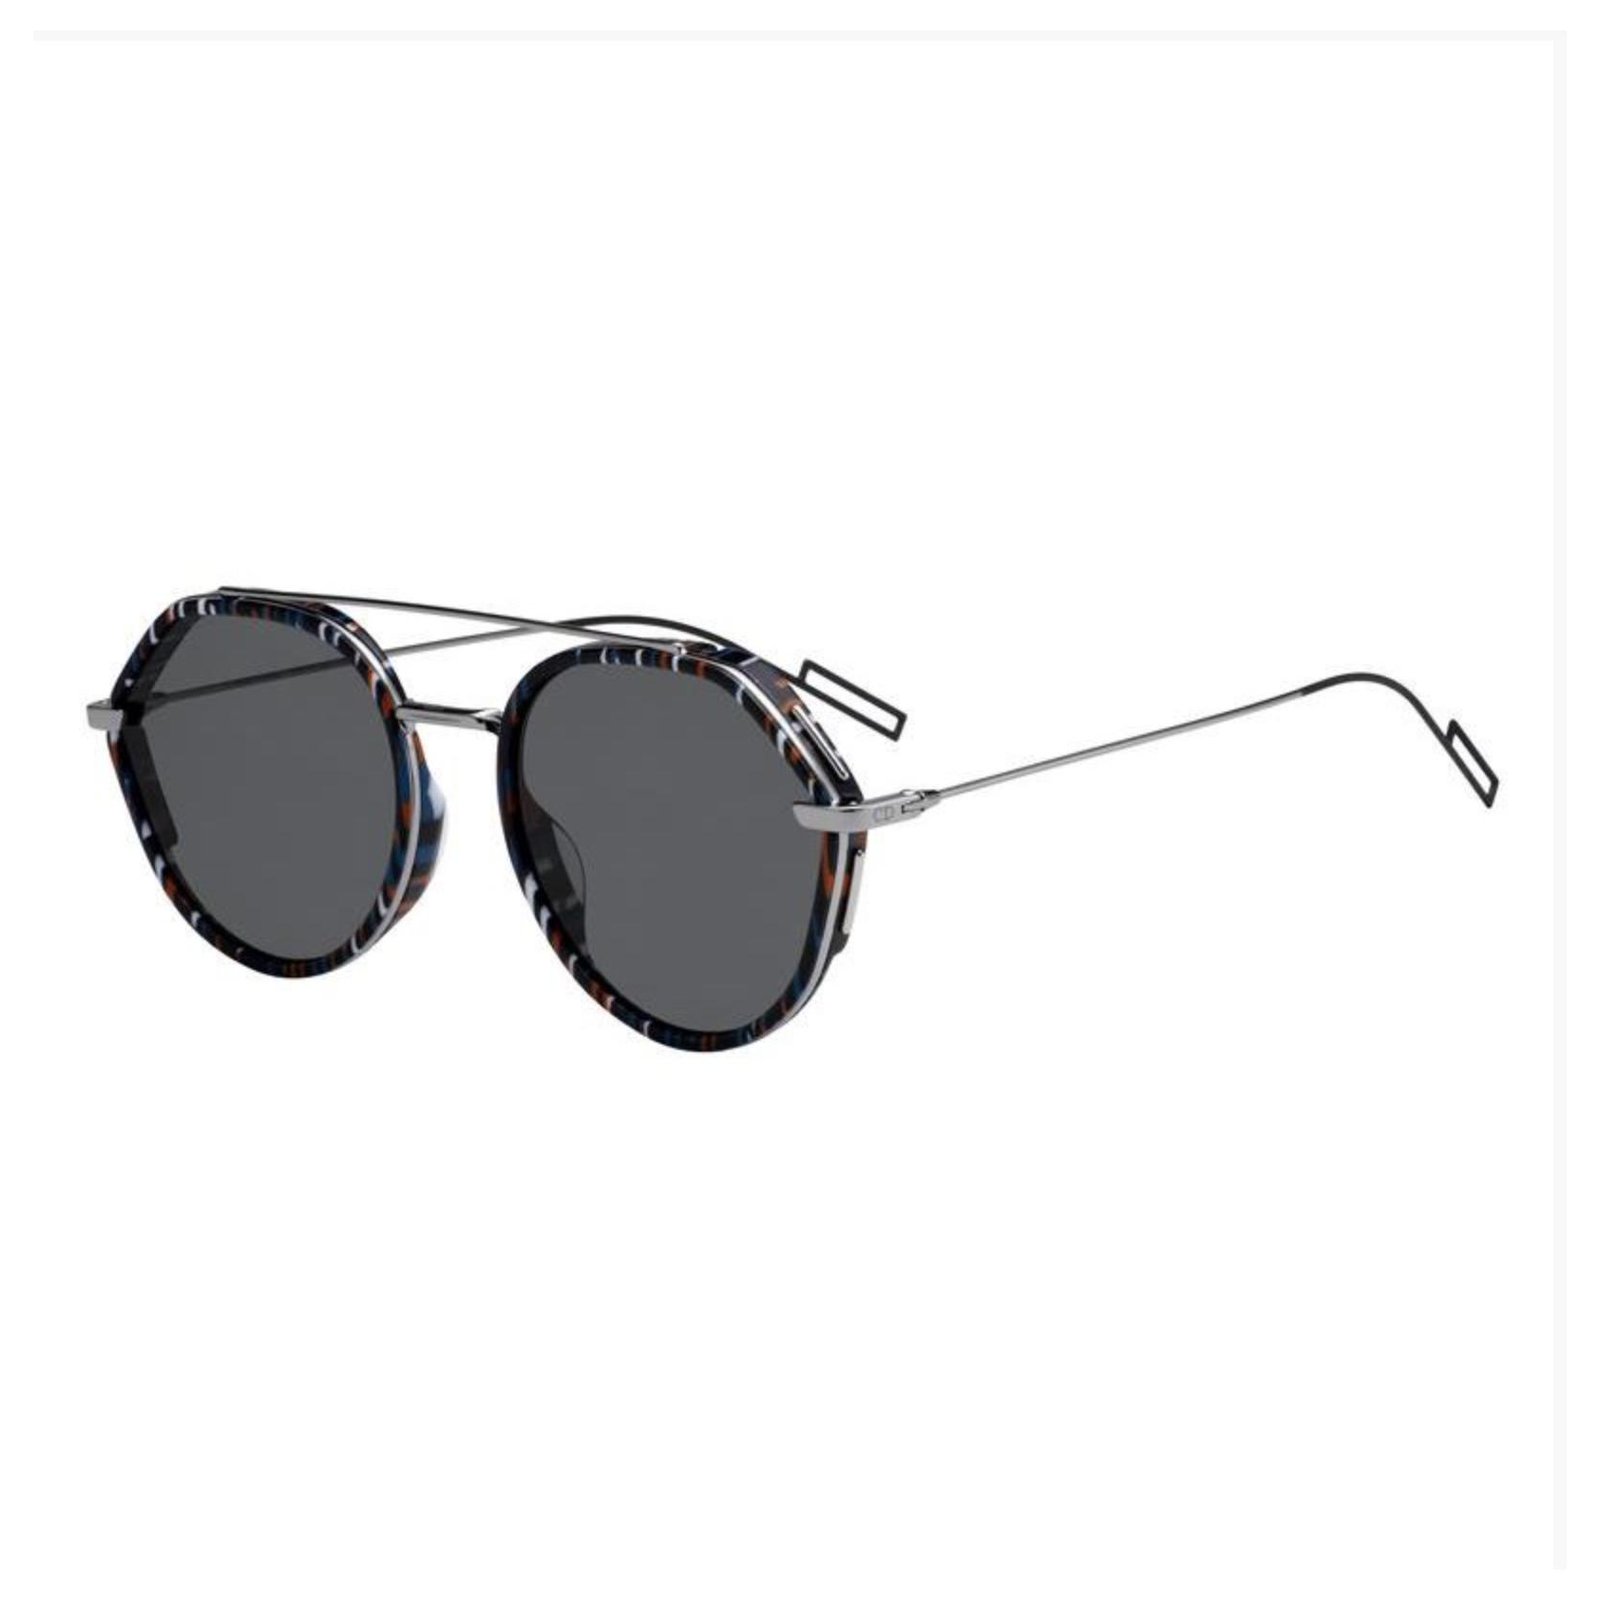 dior sunglasses 2019 price